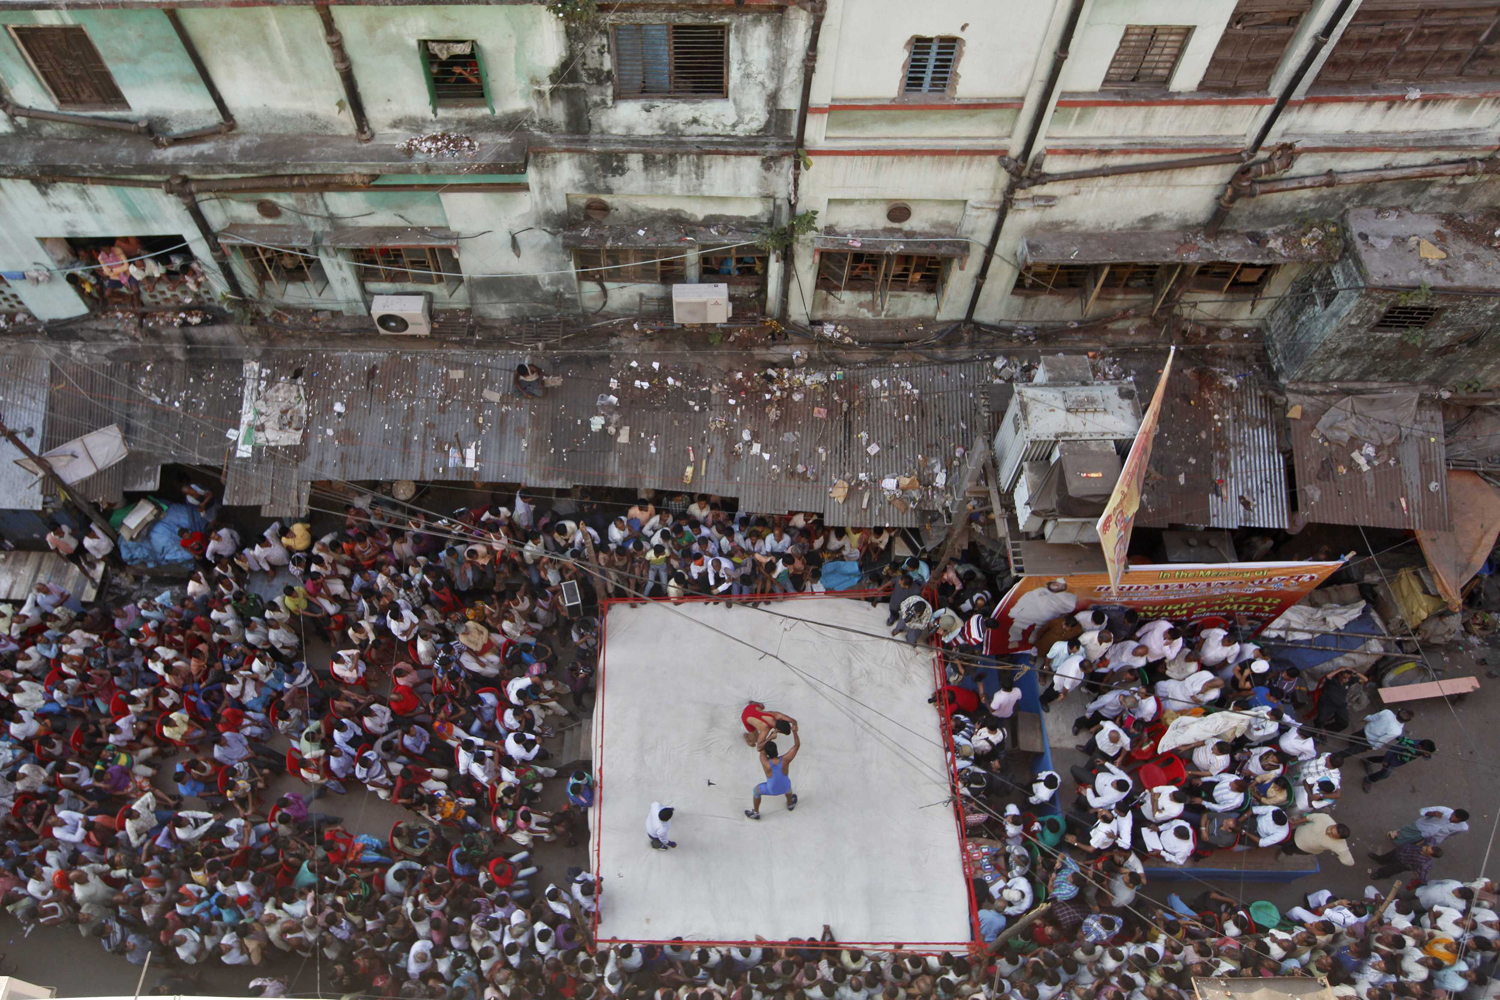 Image: Nov. 14, 2012. Two wrestlers fight during an amateur wrestling match inside a makeshift ring built on a road junction in Kolkata.